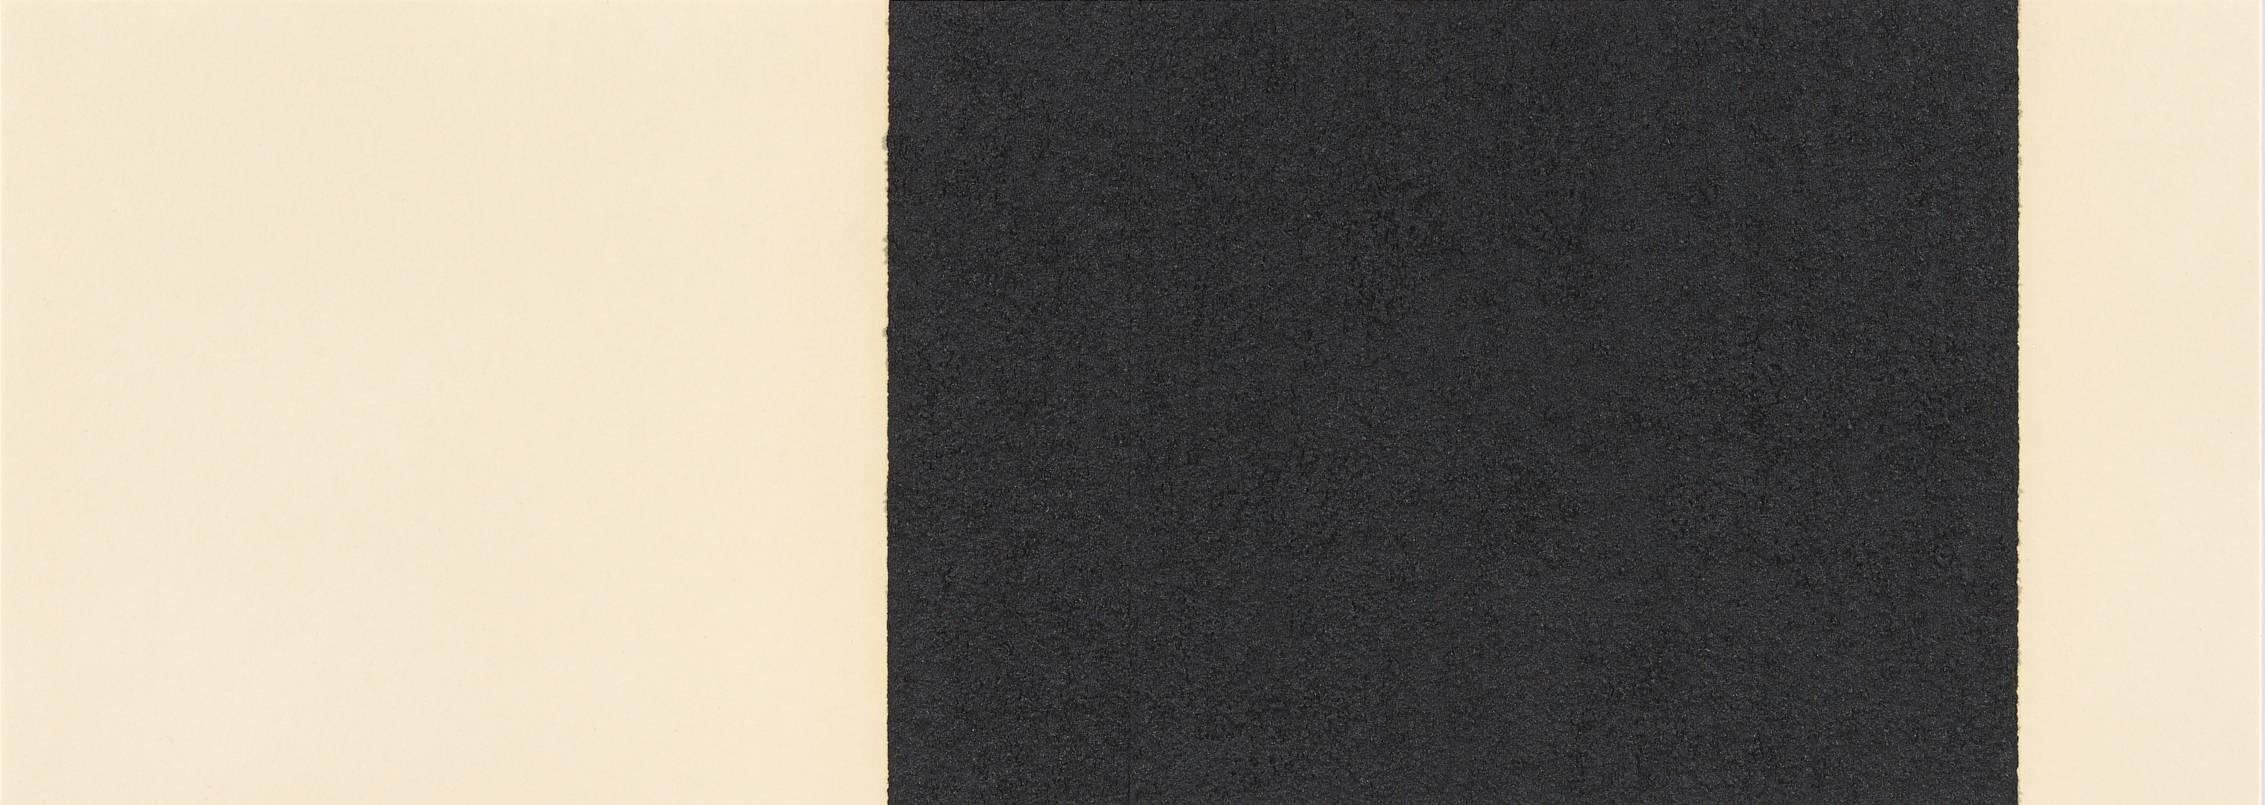 Richard Serra Abstract Print - Horizontal Reversal V